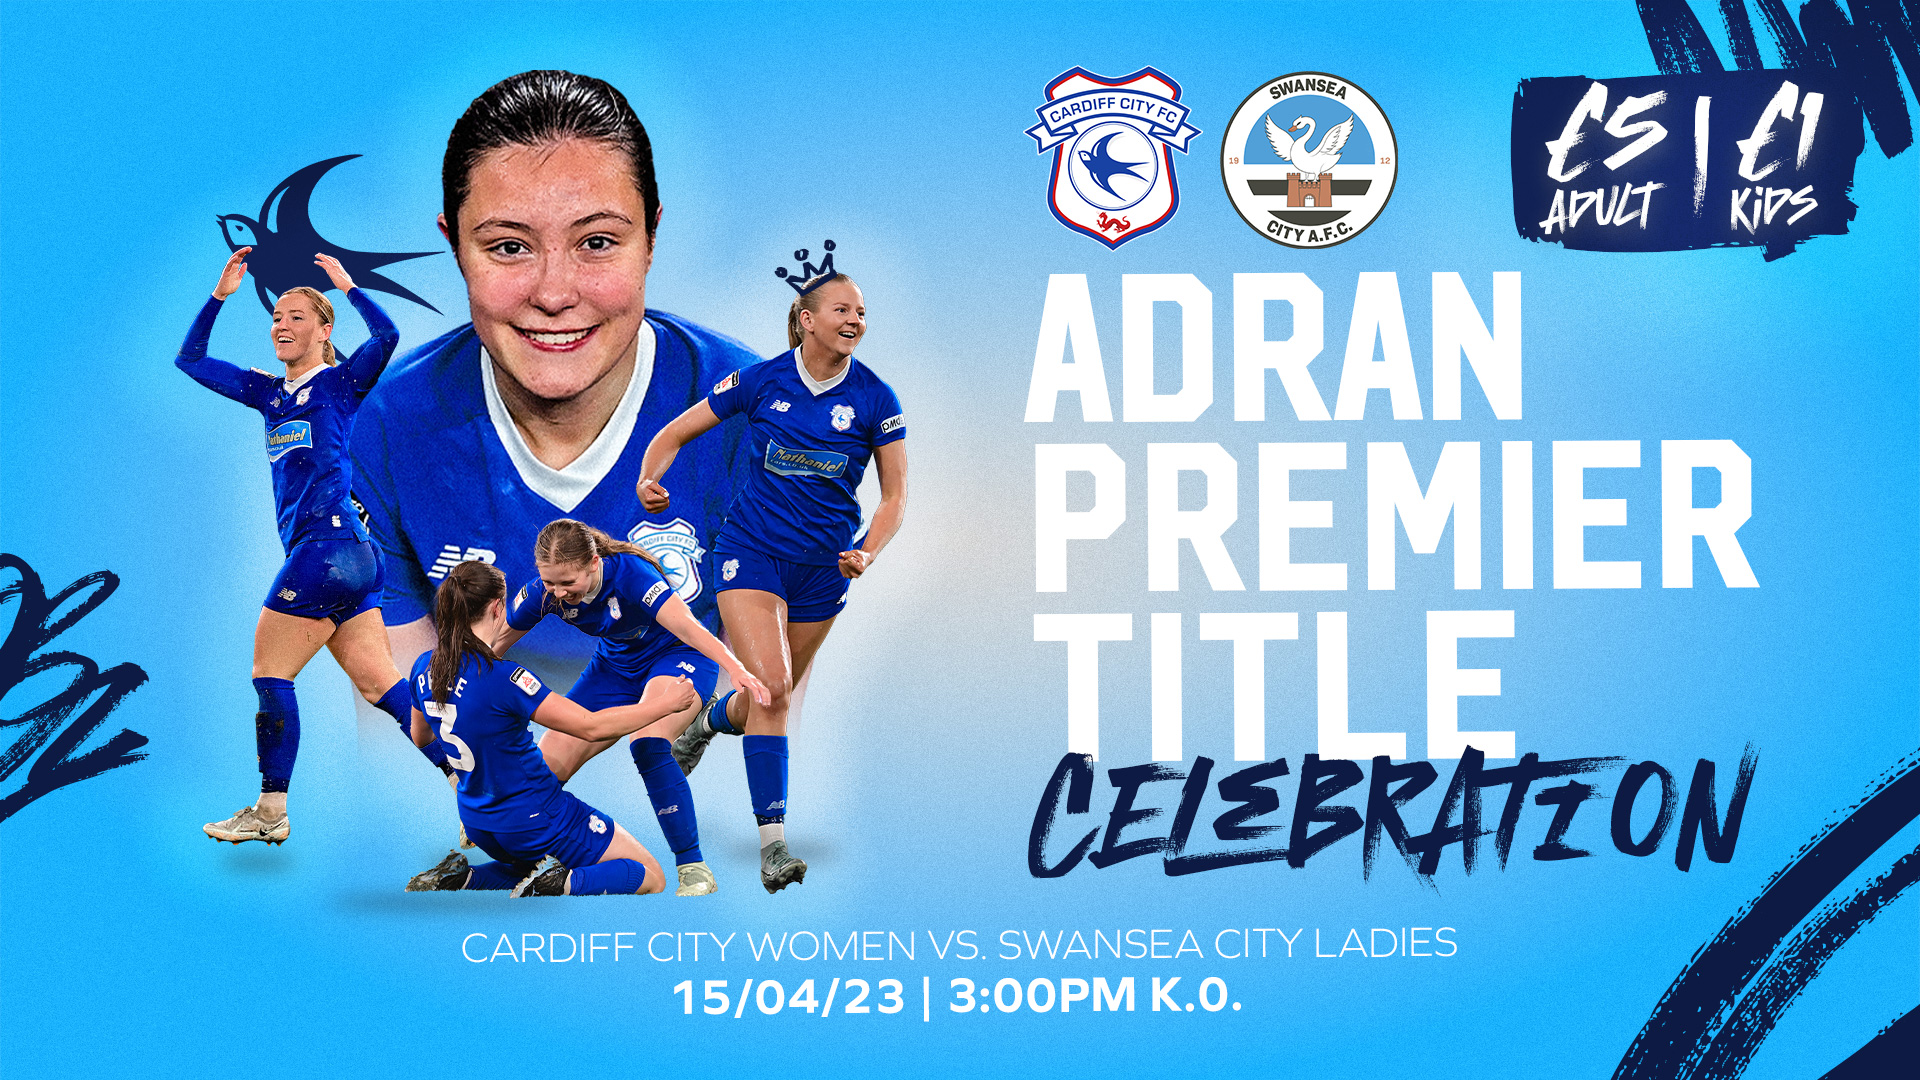 Adran Premier Title celebration this weekend at CCS...